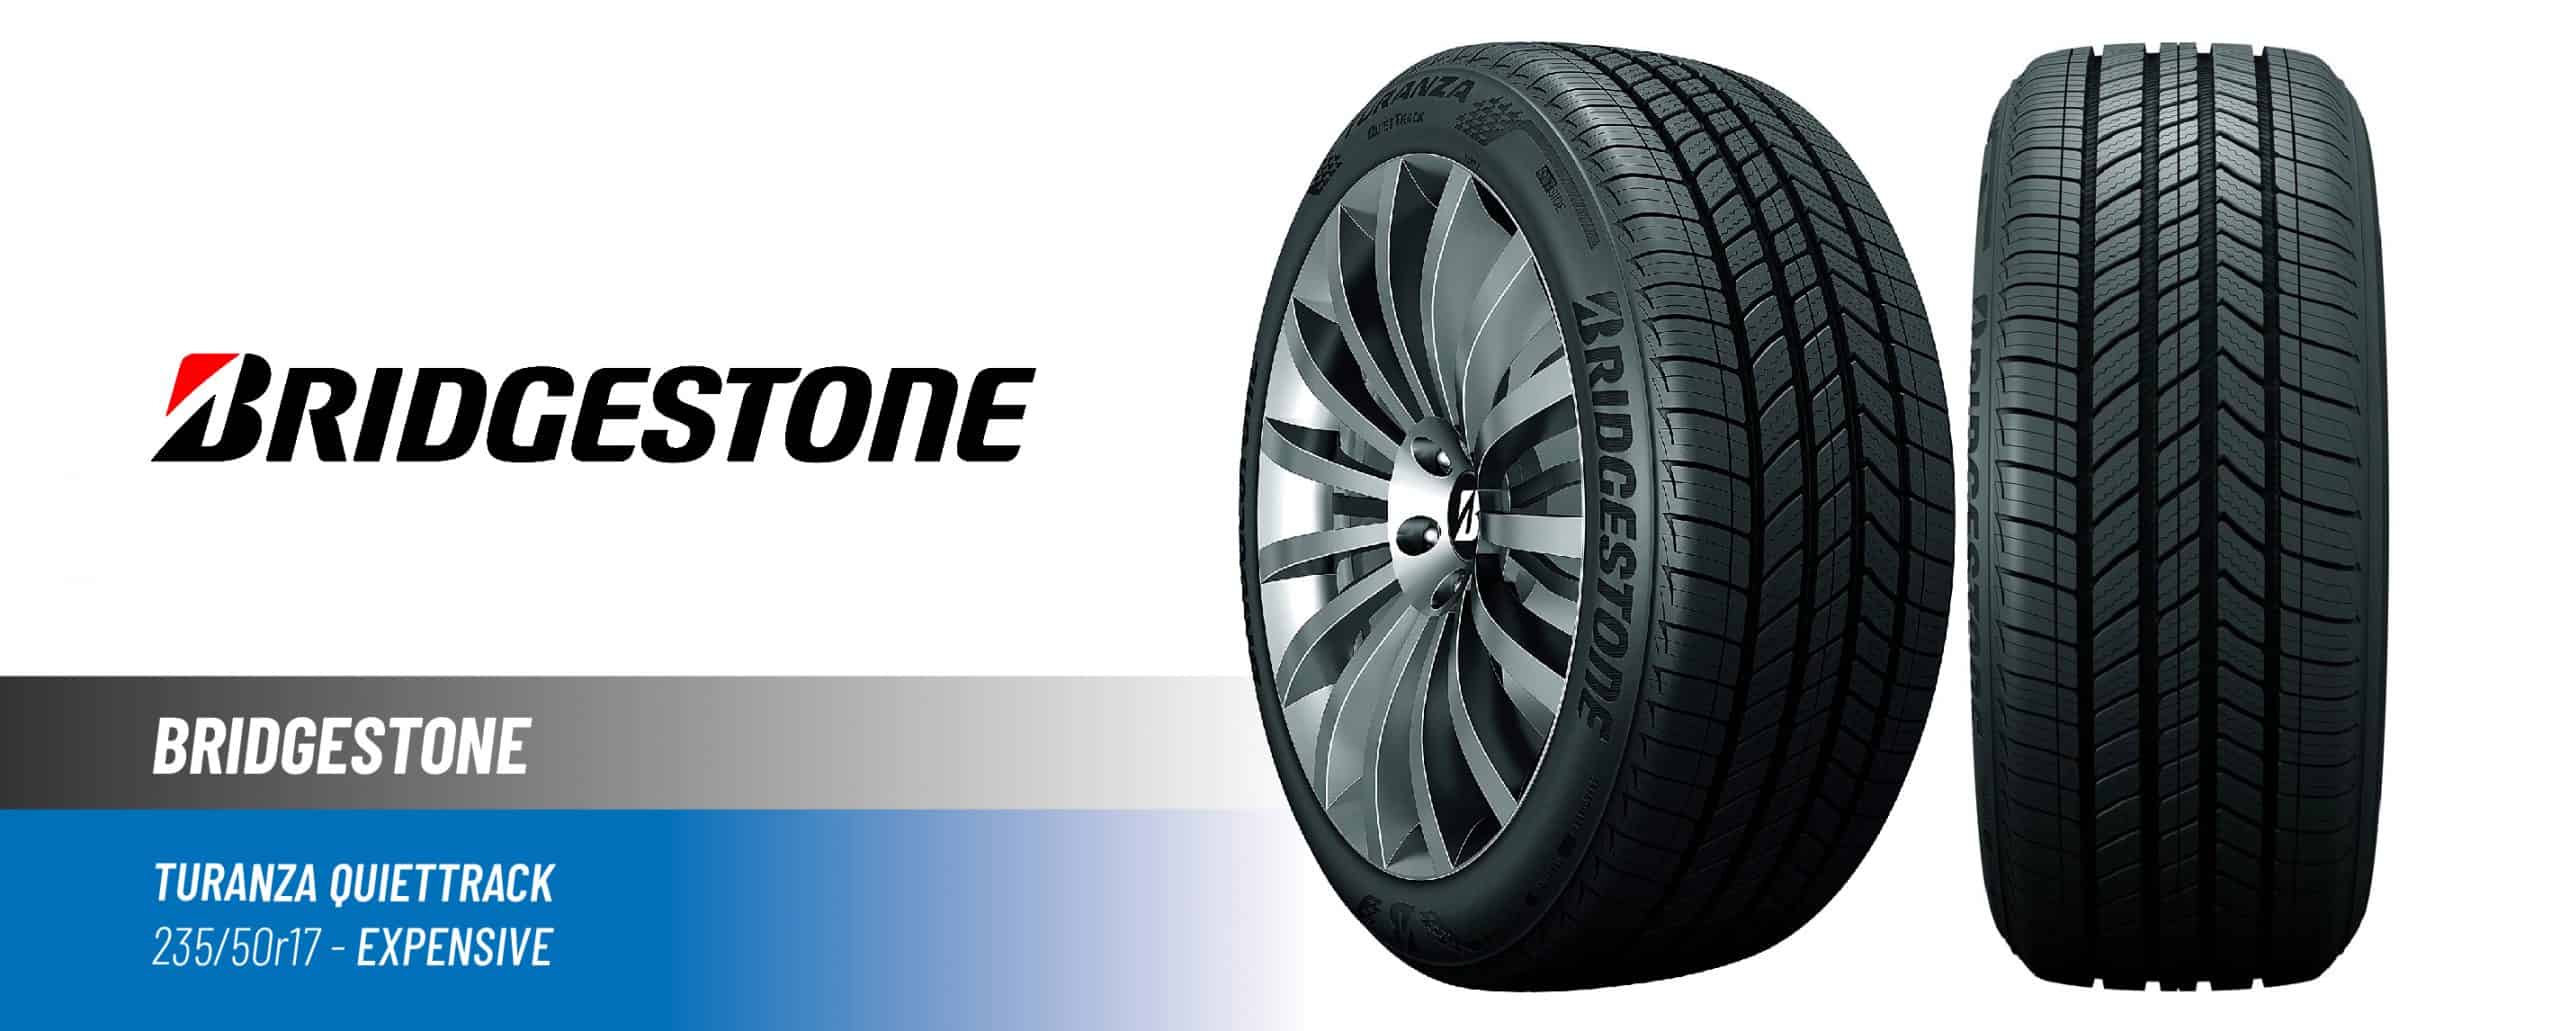 Top#5 Most Expensive: Bridgestone Turanza QuietTrack – 235/50 R17